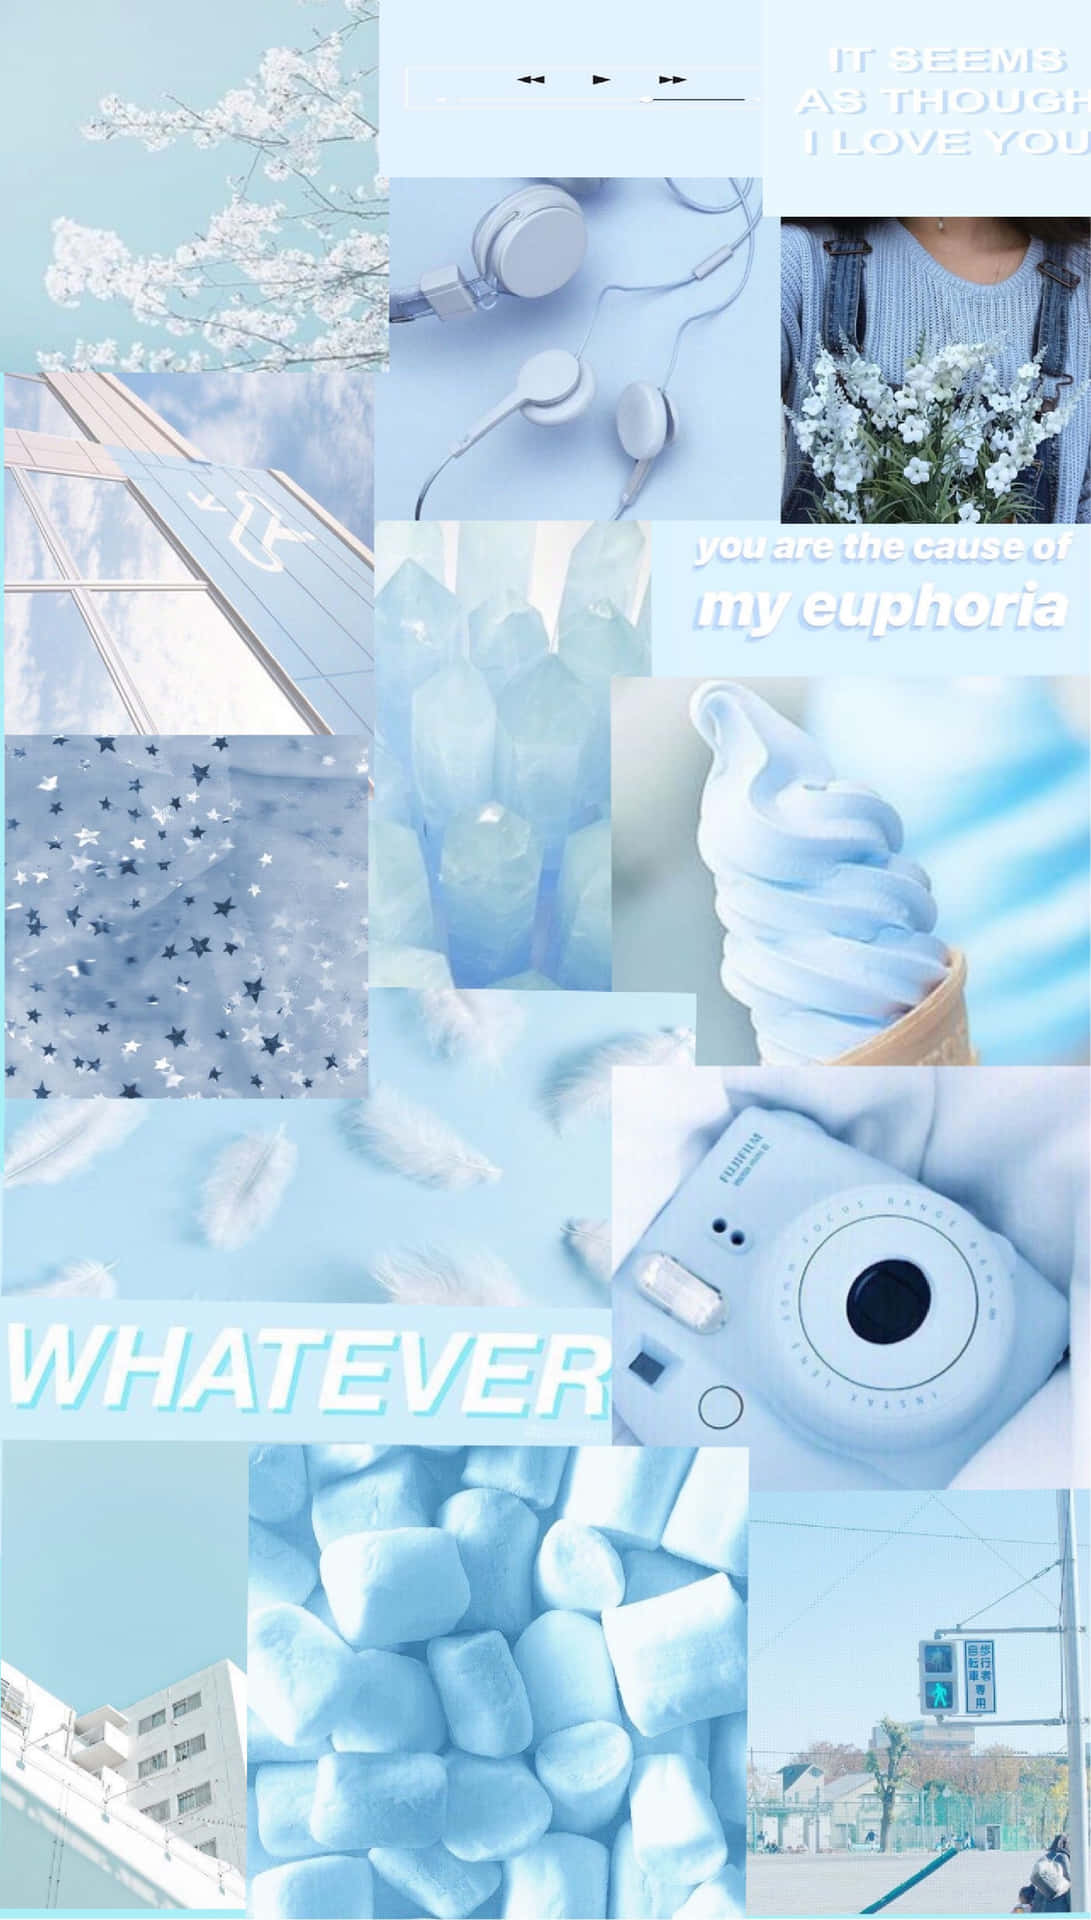 blue gradient background tumblr